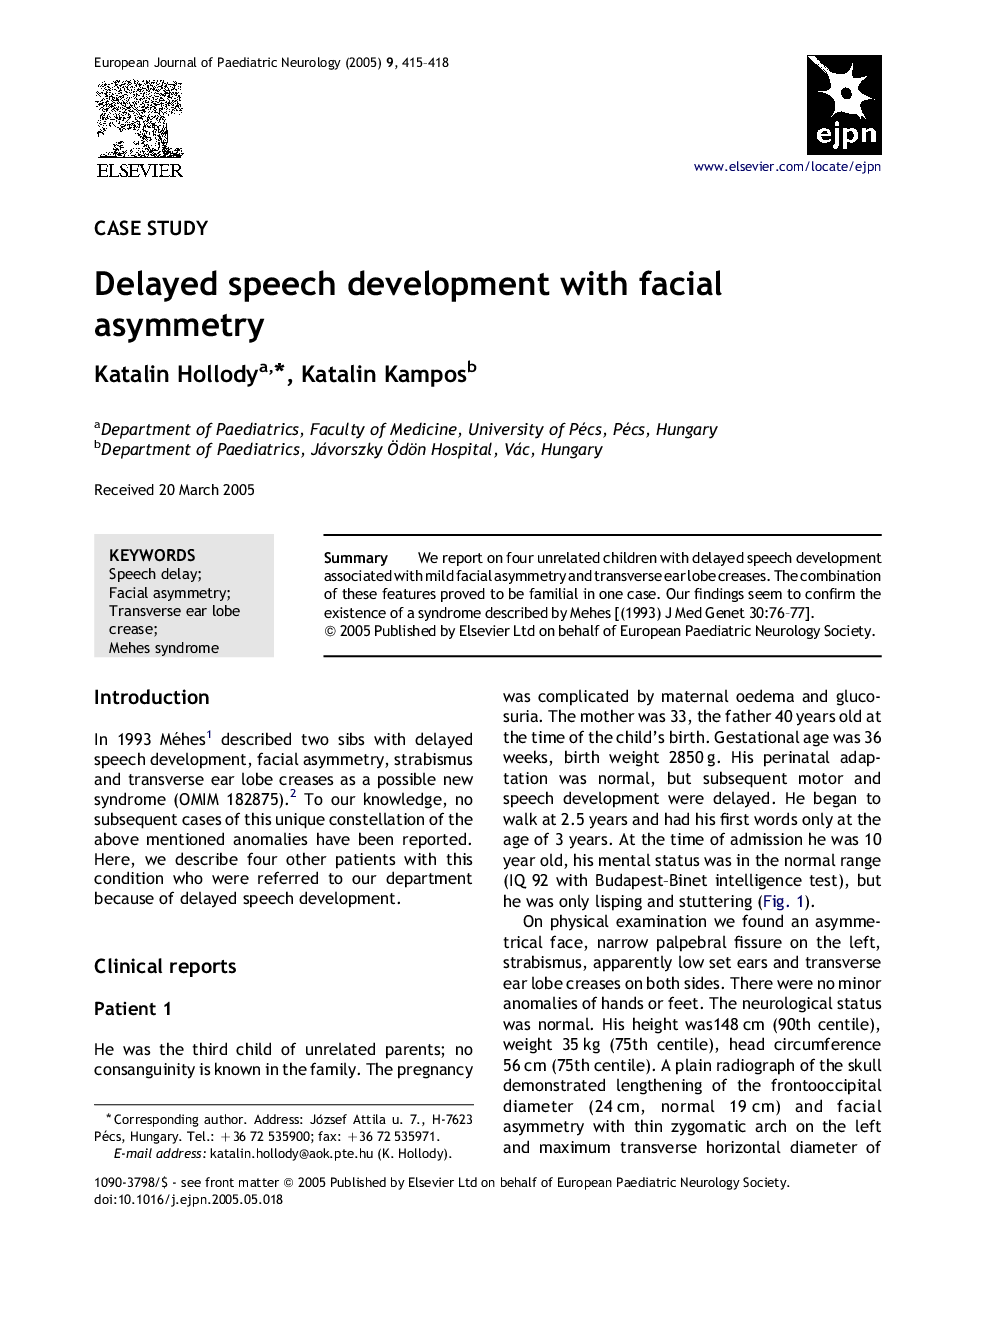 Delayed speech development with facial asymmetry